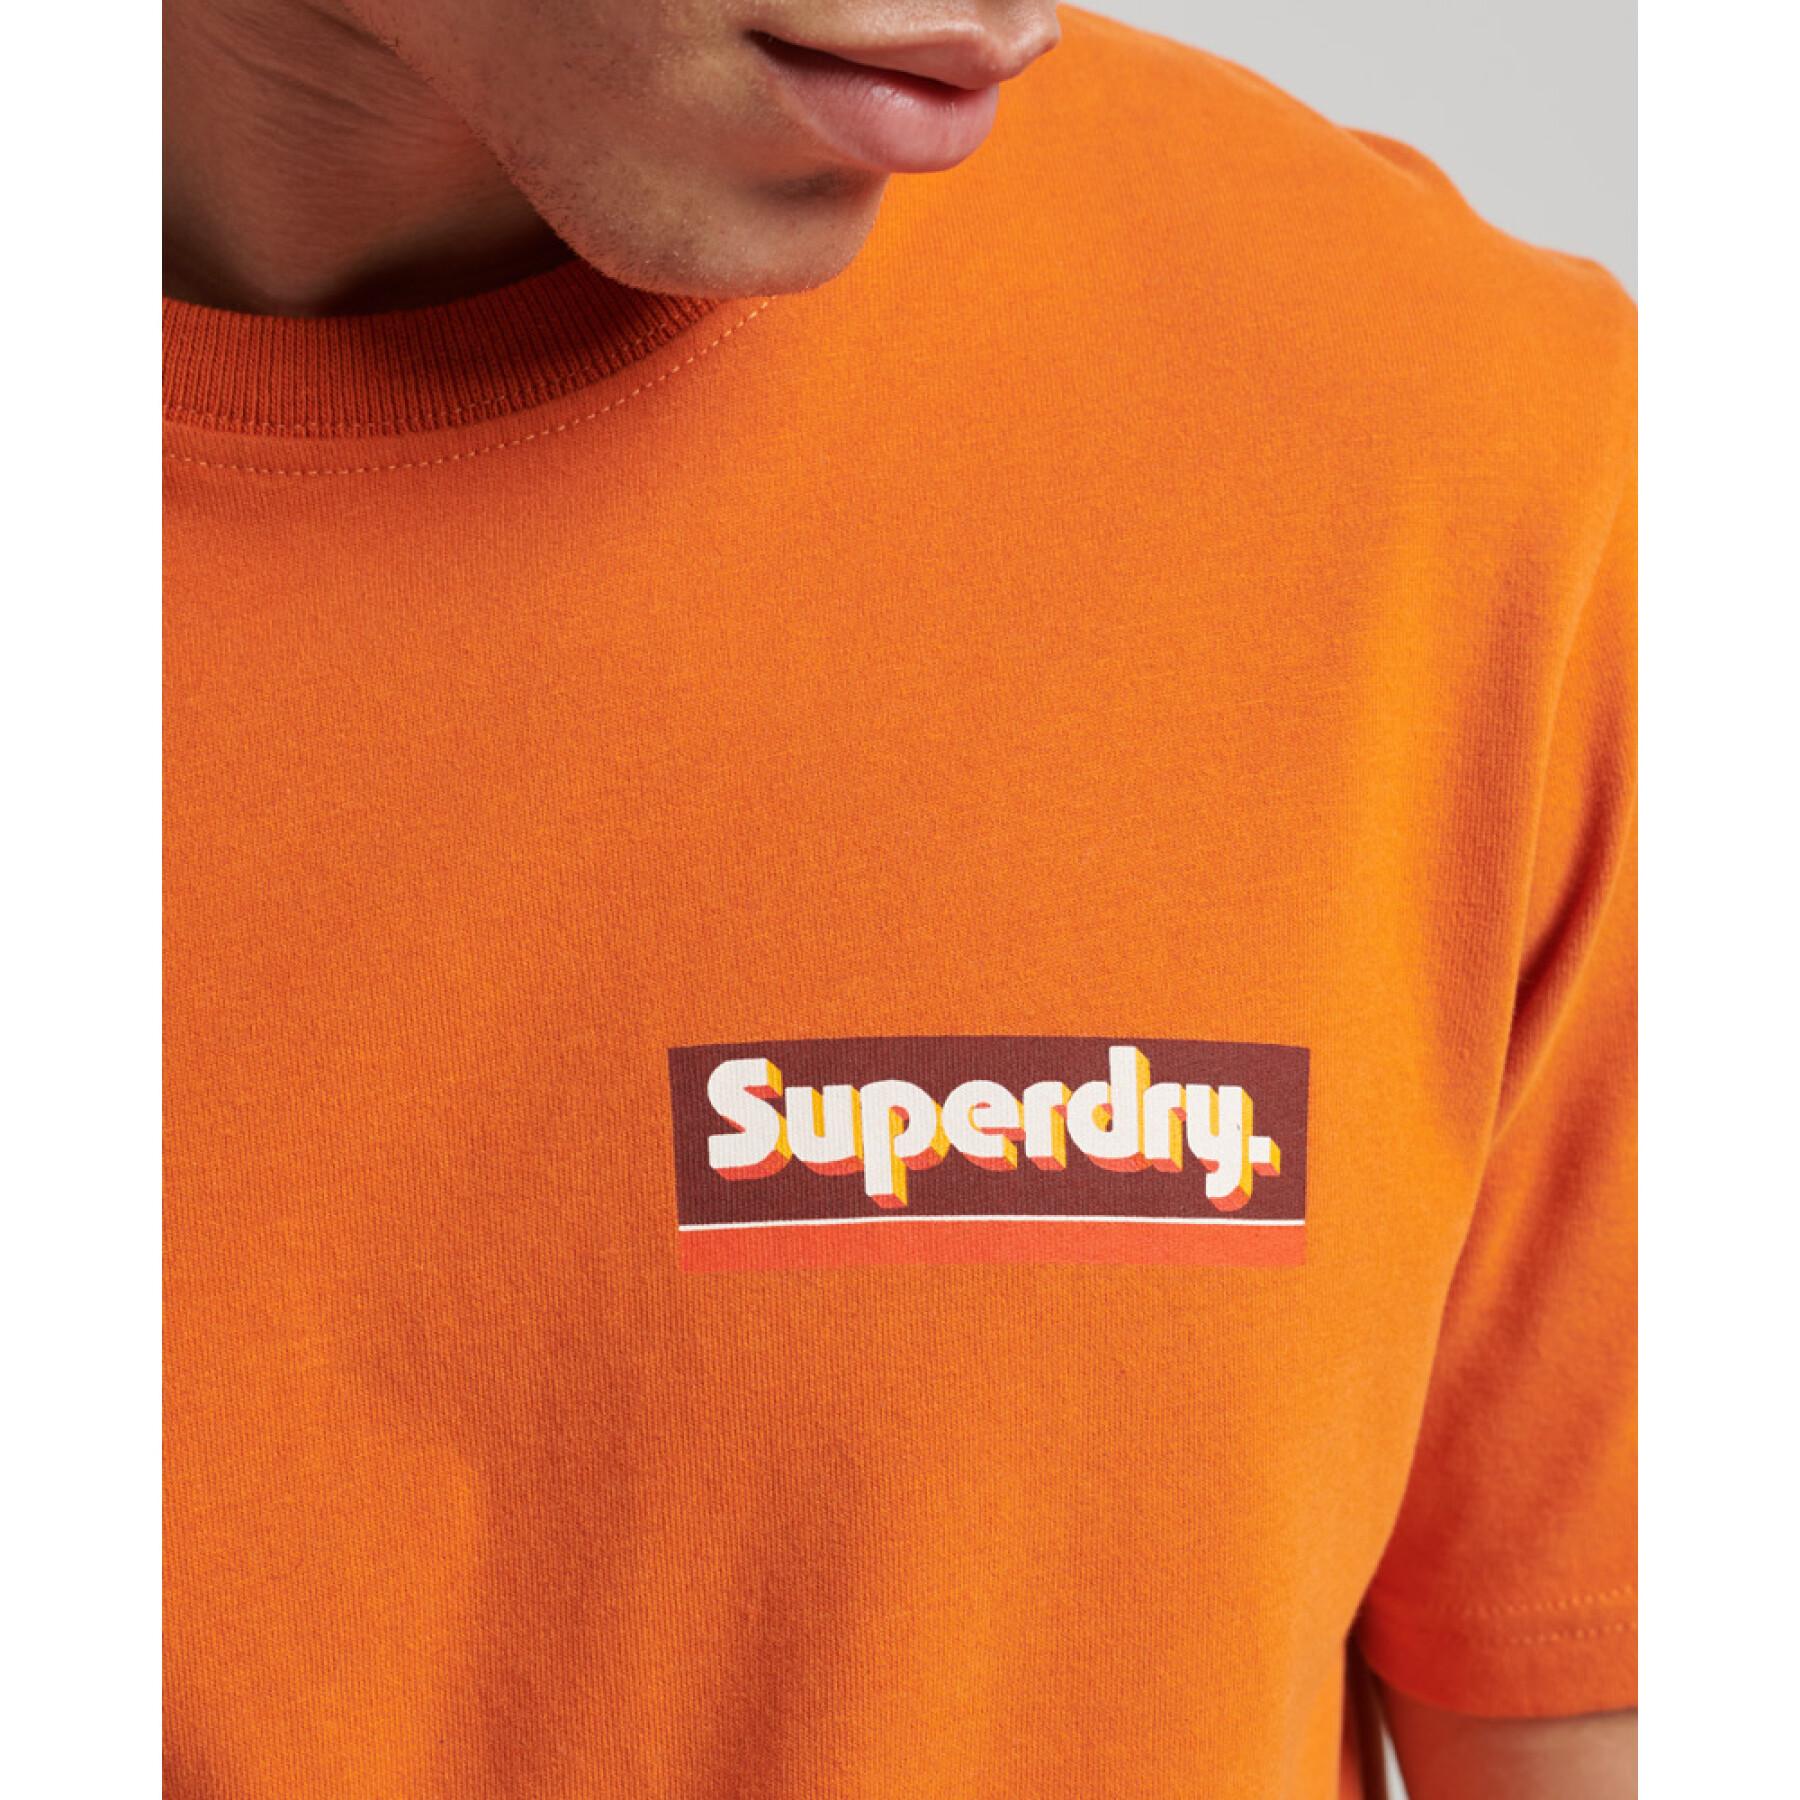 Camiseta Superdry Vintage Trade Tab